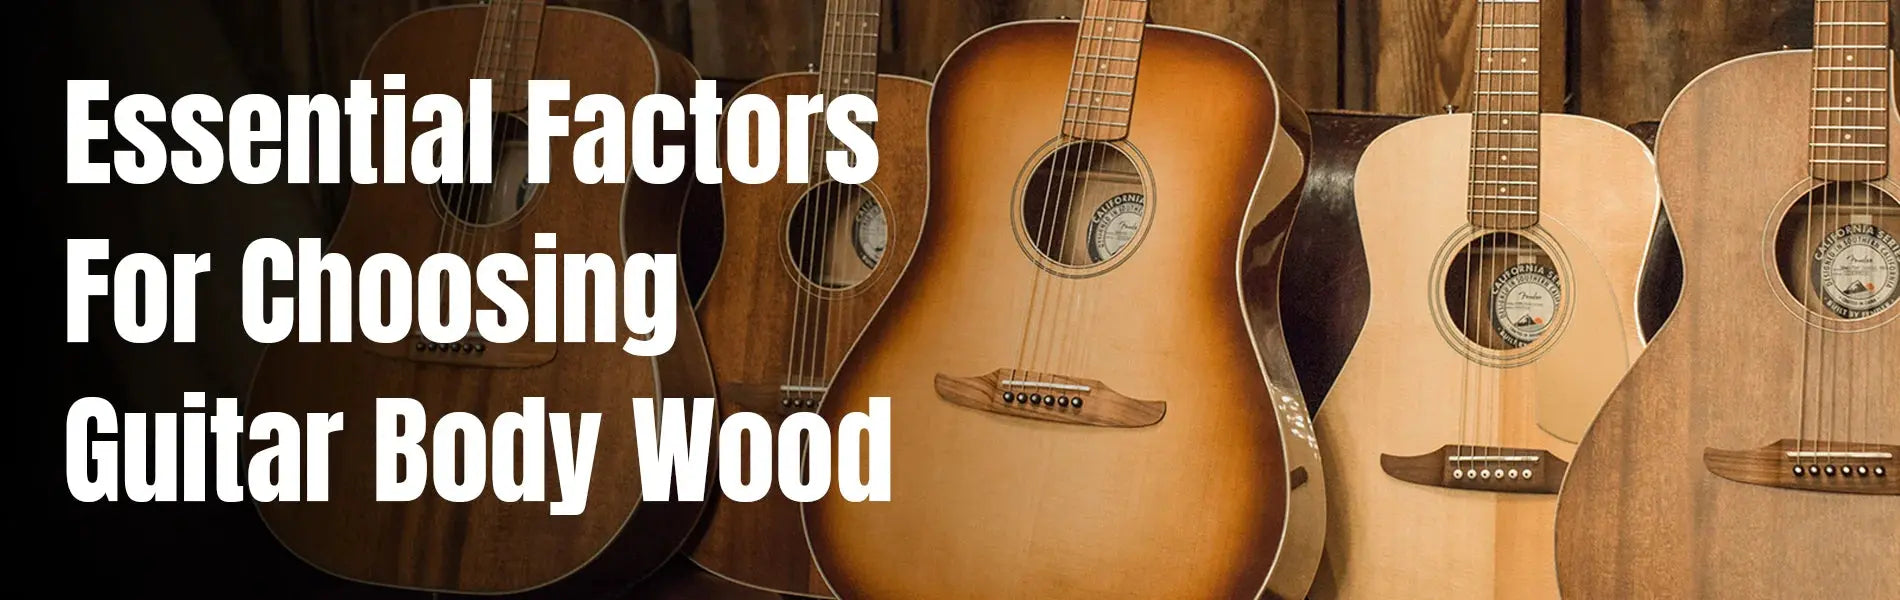 Essential-Factors-for-Choosing-Guitar-Body-Wood Exotic Wood Zone